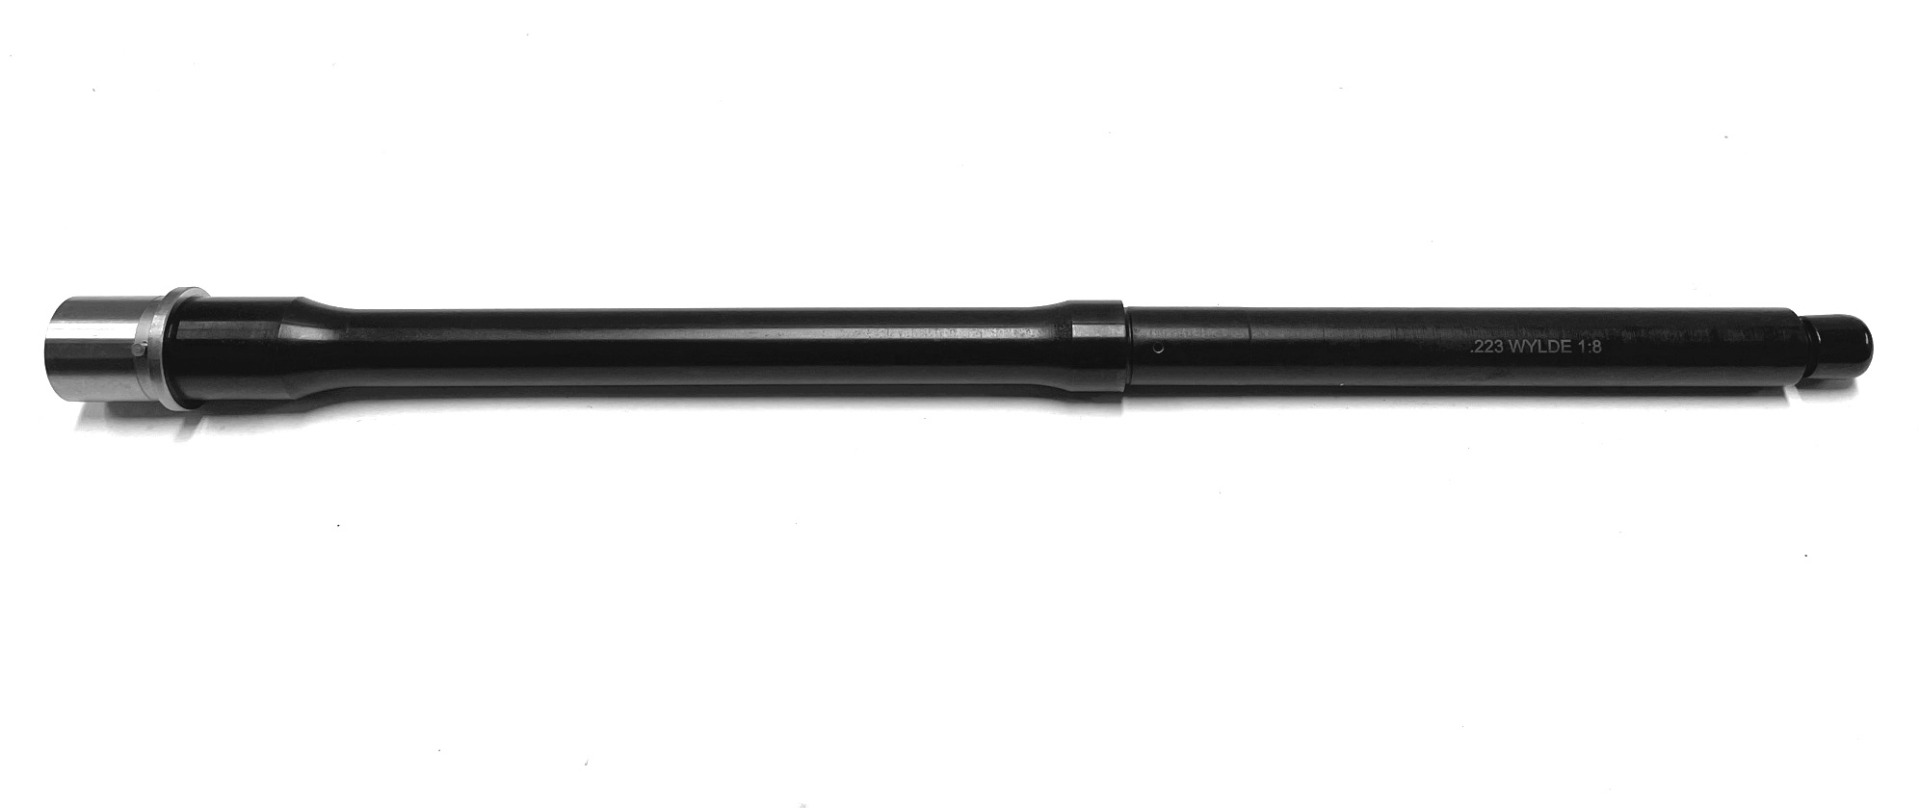 Tactical Kinetics 16 inch AR-15 223 Wylde Melonite Barrel - BLEM